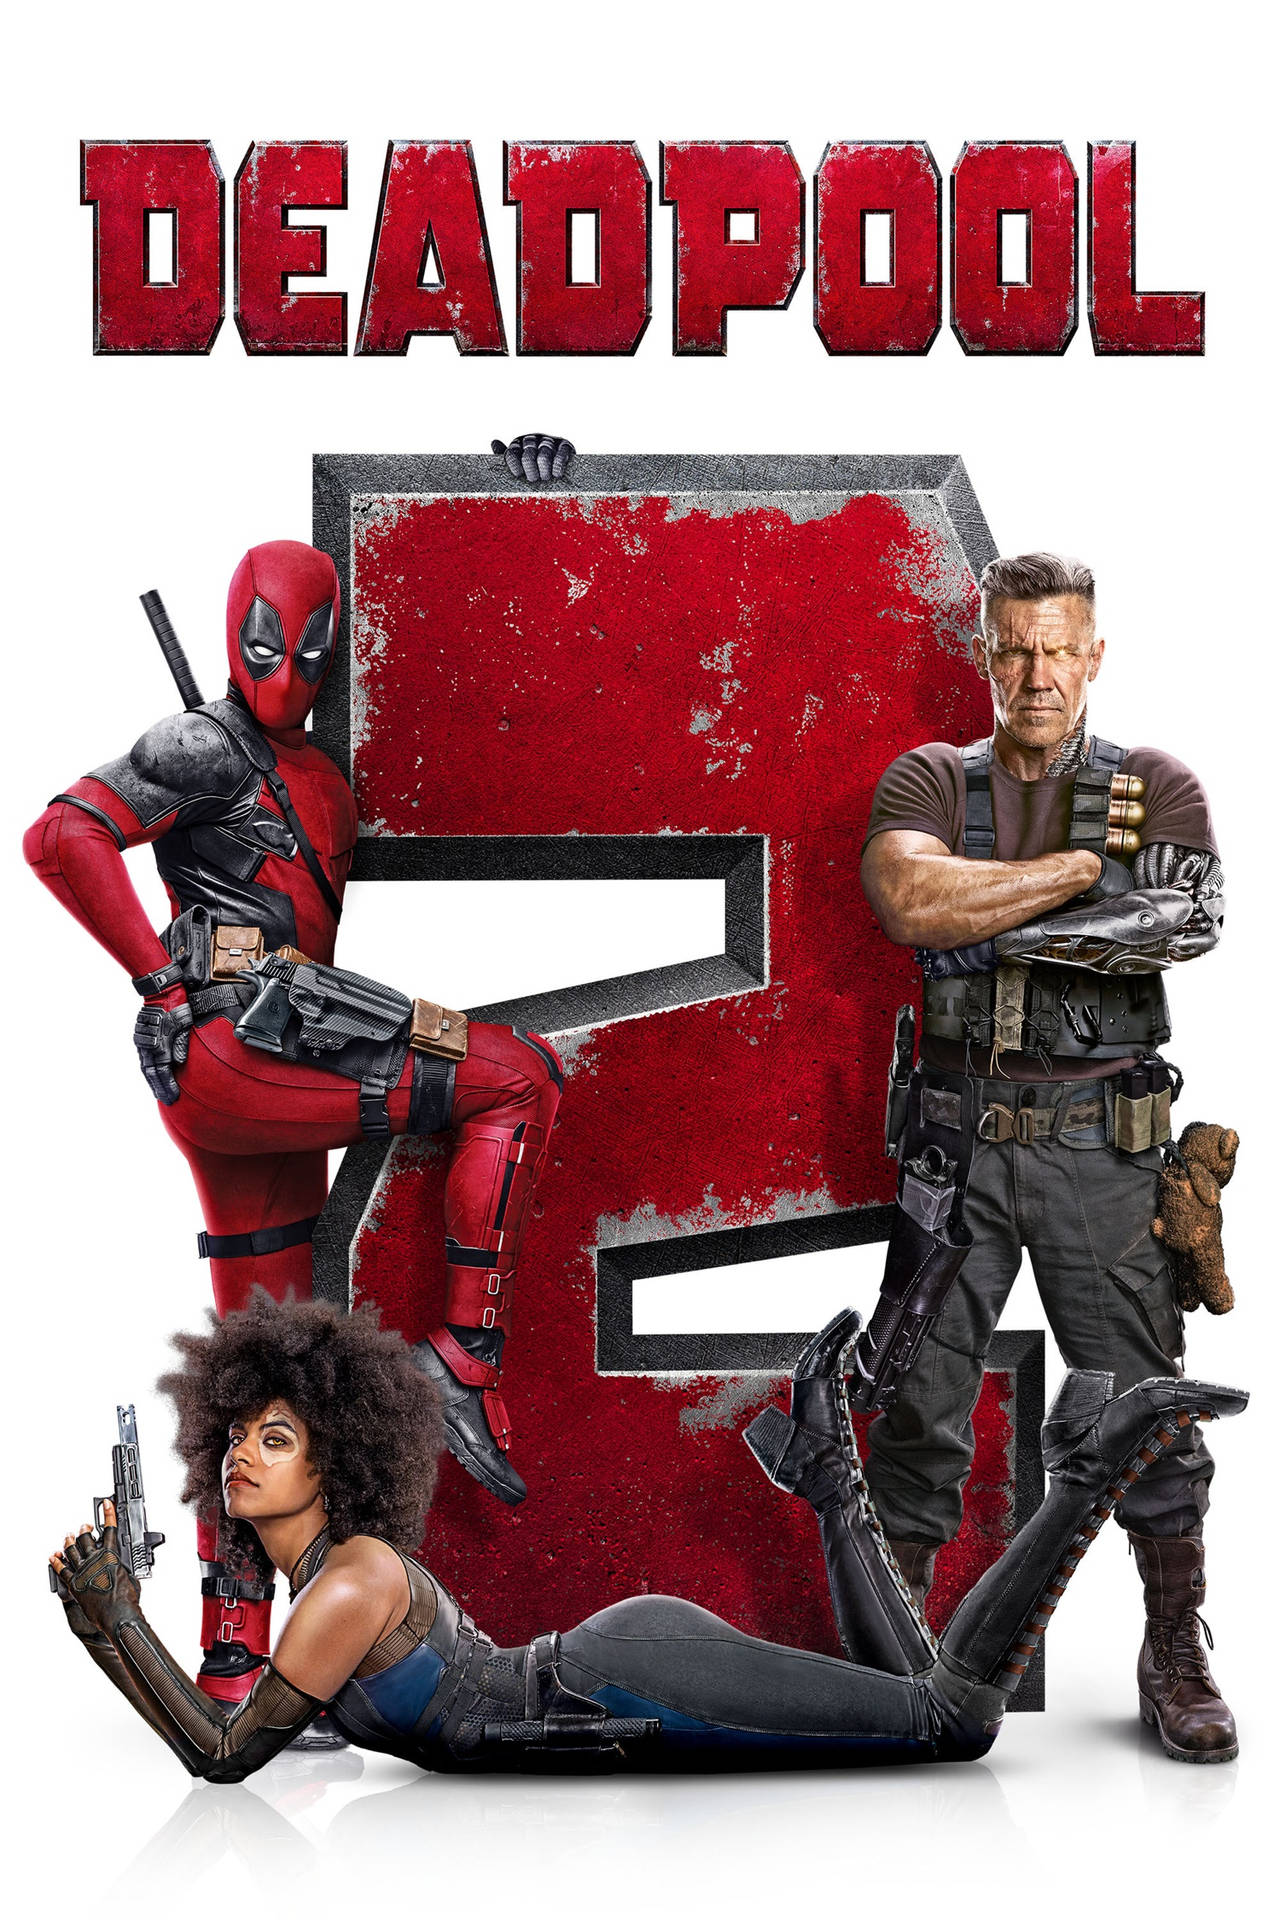 Deadpoolfilm 2 Plakat Mit Cable Und Domino Wallpaper